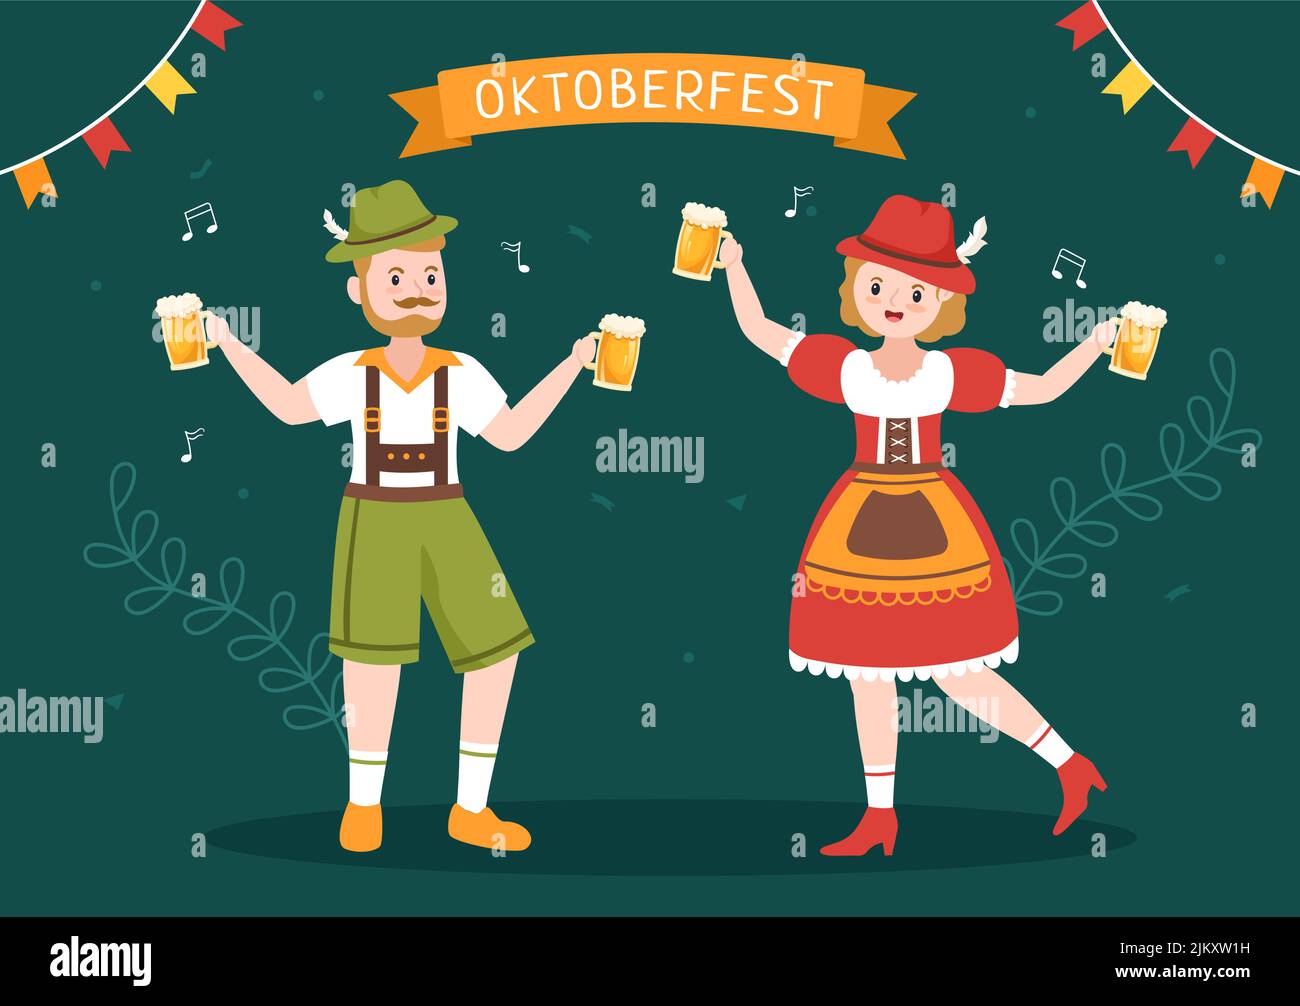 Oktoberfest dancing Stock Vector Images - Alamy